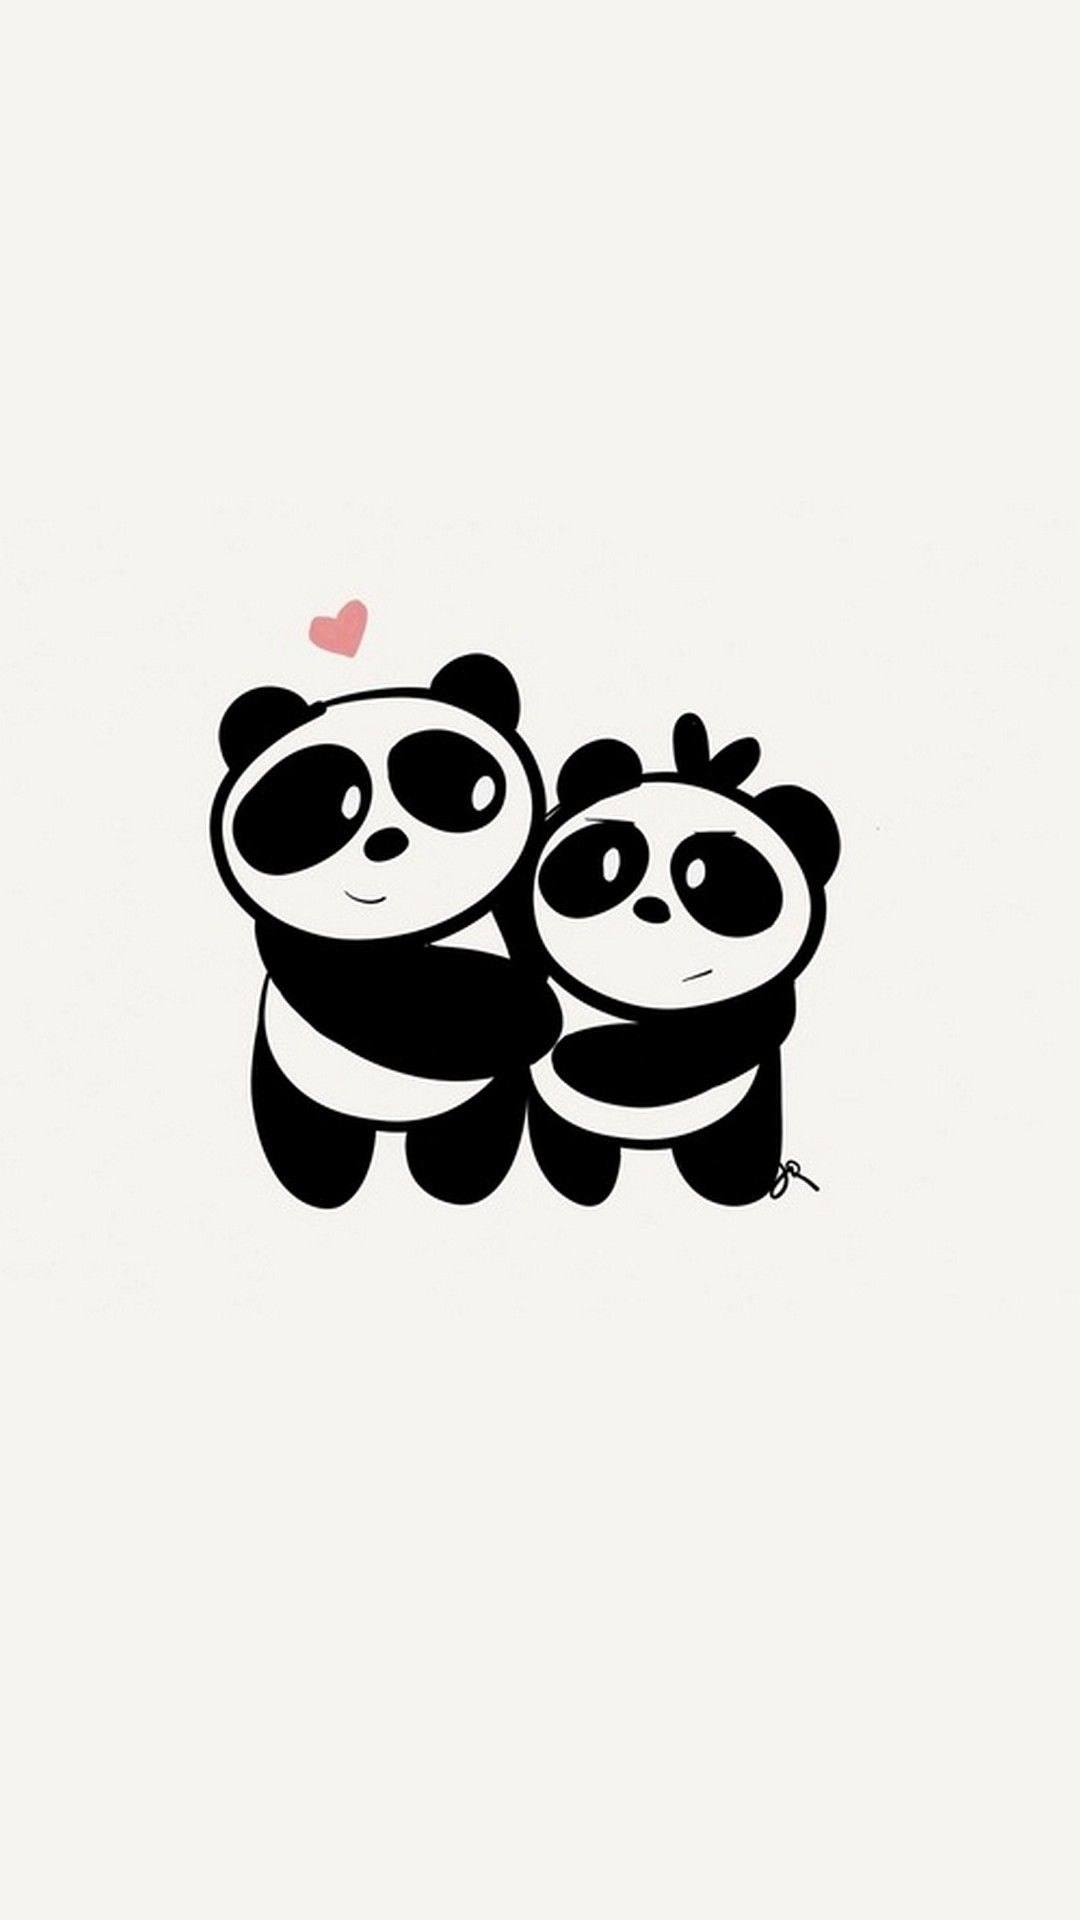 Мило крутые обои на телефон. Панда рисунок. Панда фон. Панда на заставку. Классные обои с пандами.